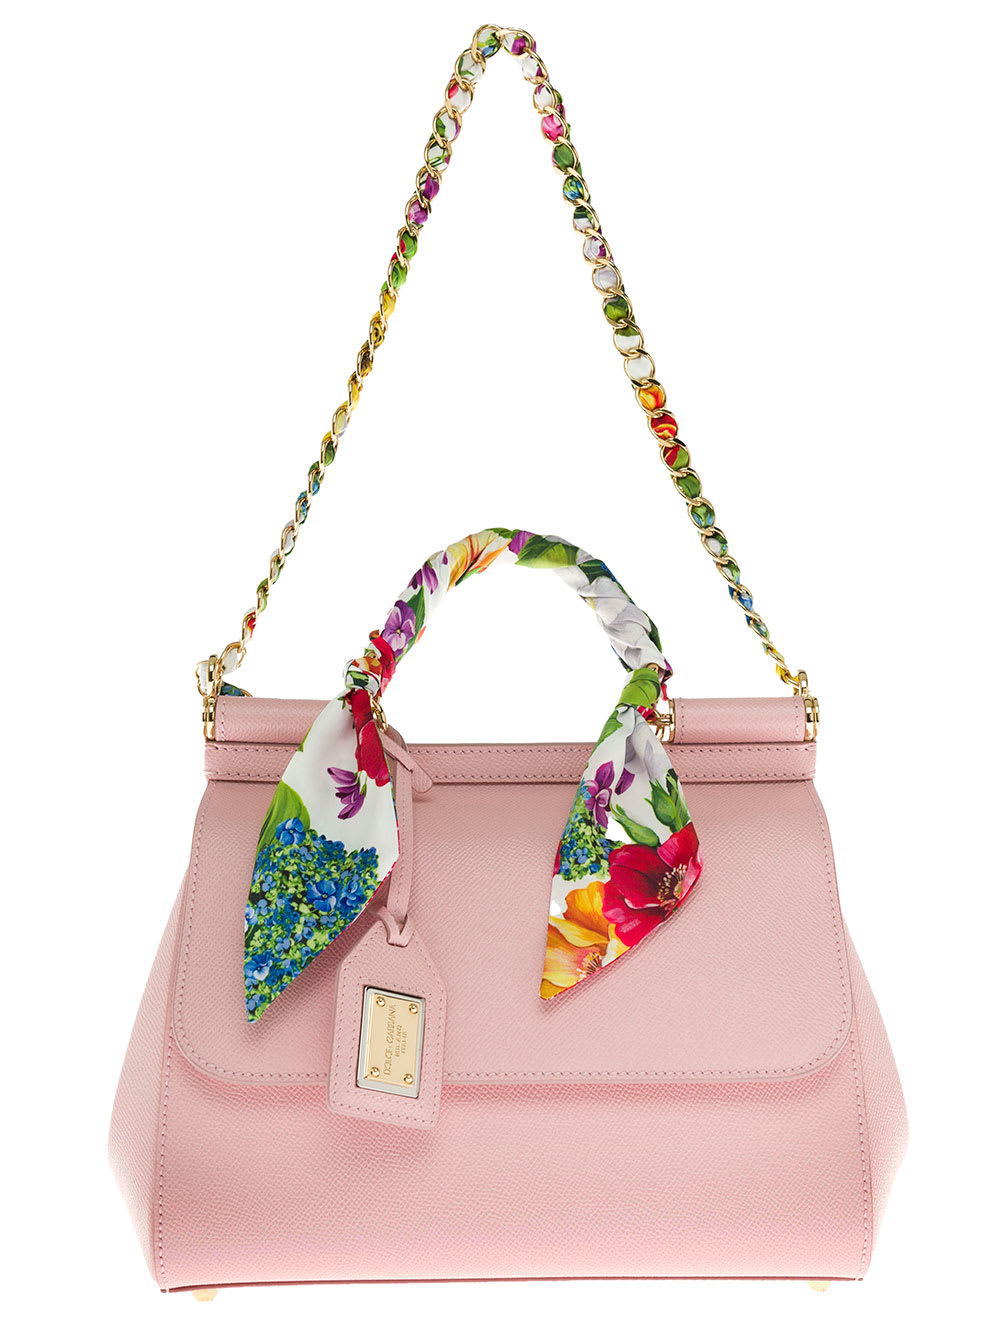 Dolce & Gabbana Sicily Pink Leather Handbag